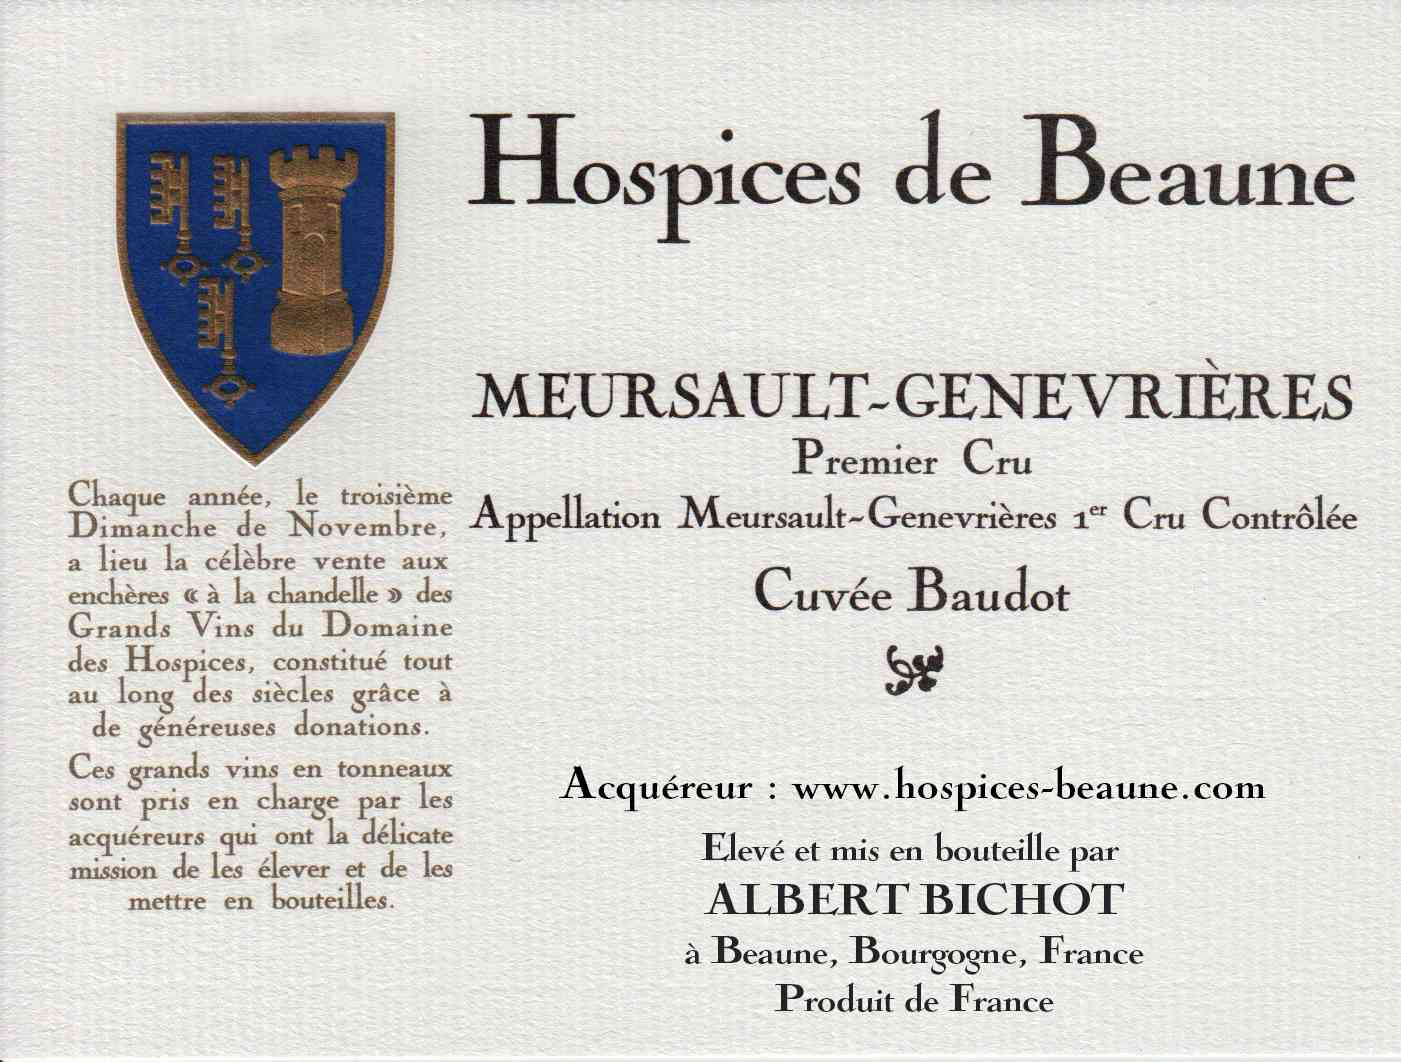 Encheres-auction-HospicesdeBeaune-AlbertBichot-Meursault-Genevrieres-PremierCru-Cuvee-Baudot